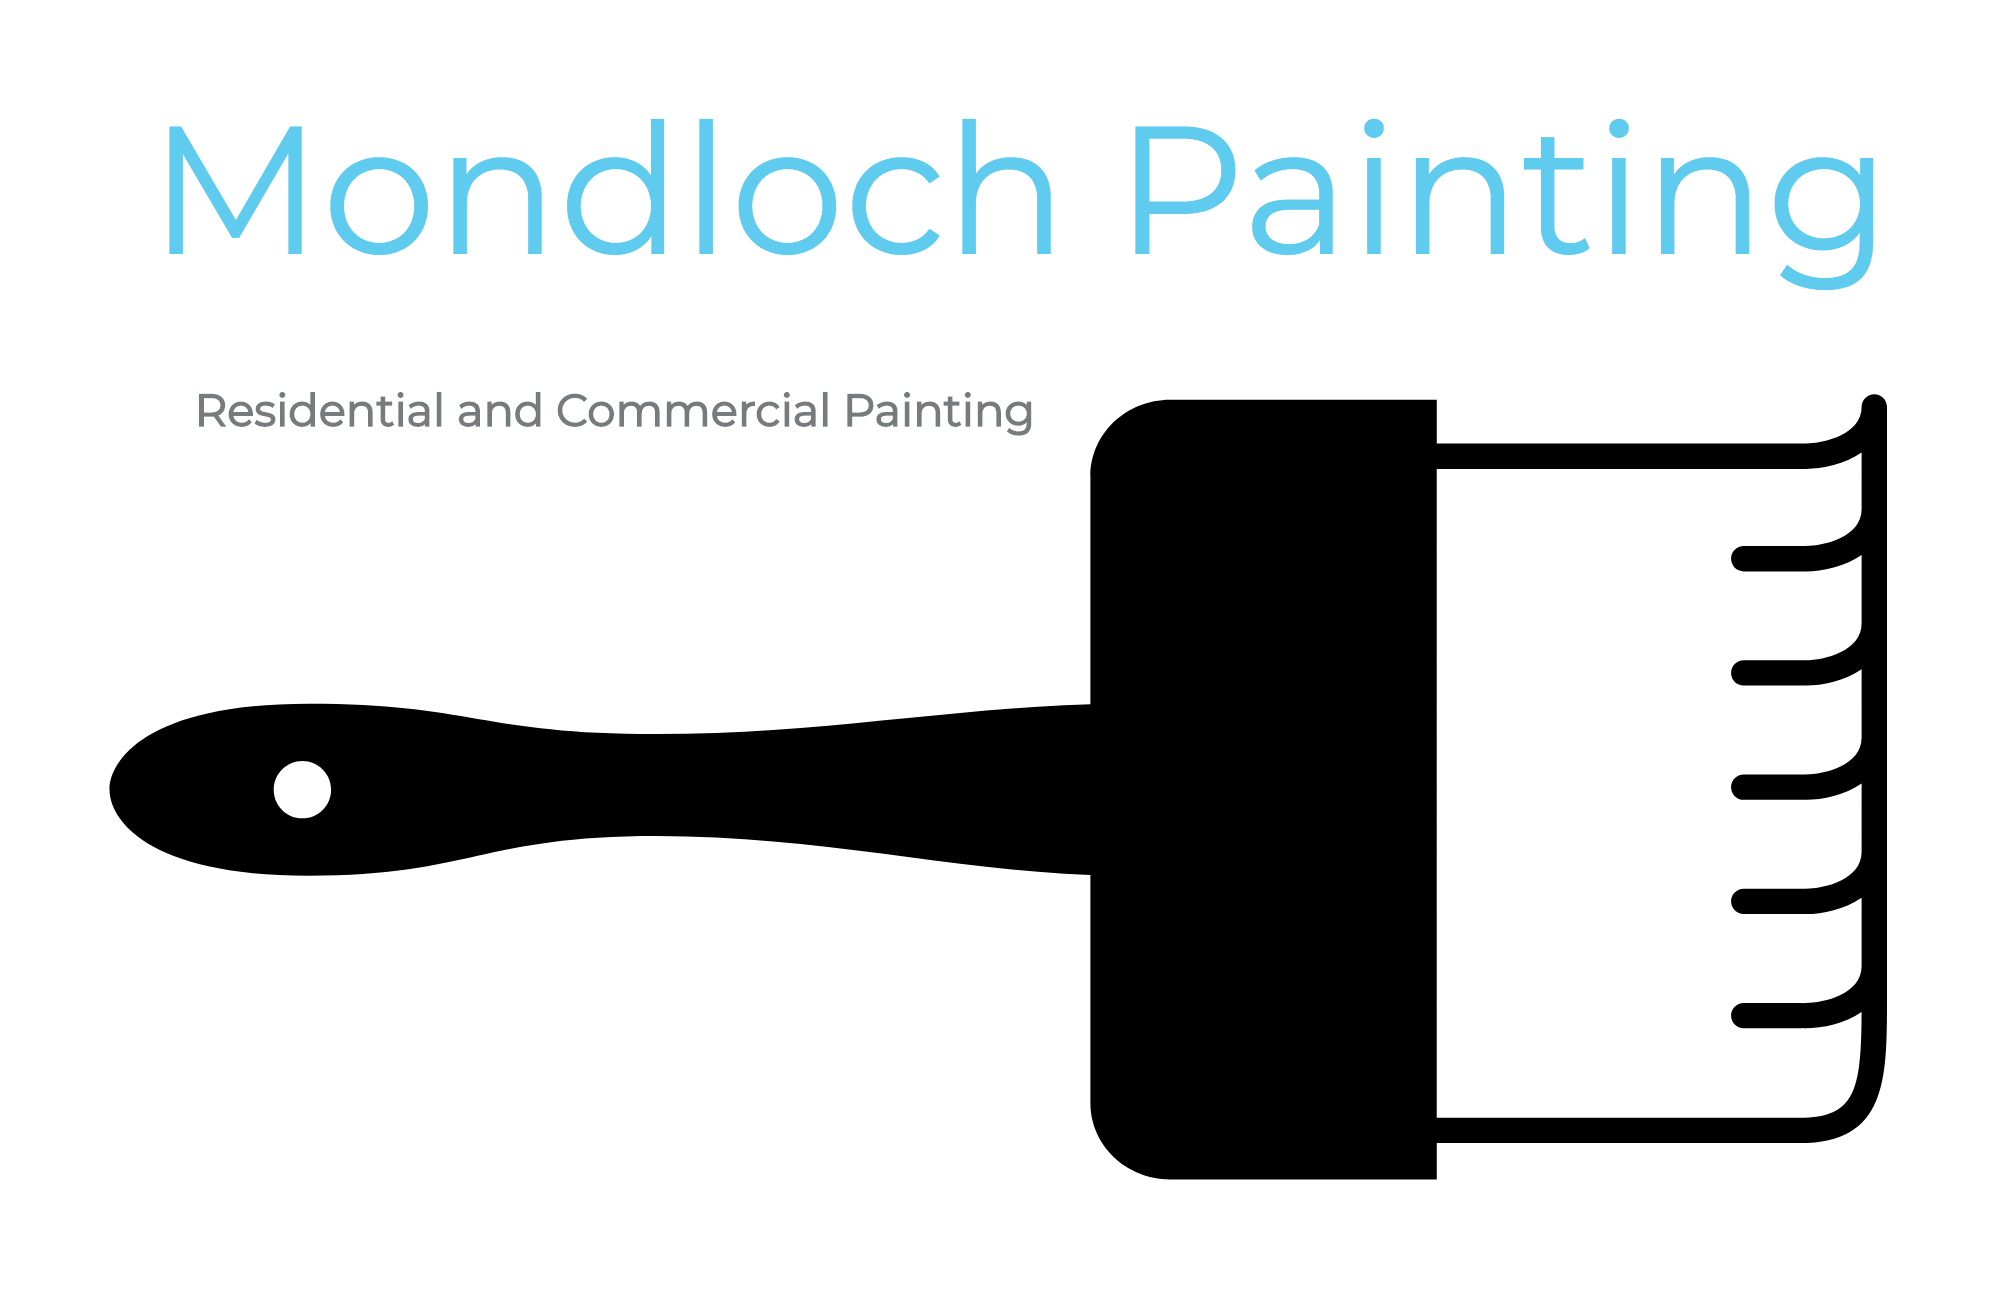 Mondloch Painting